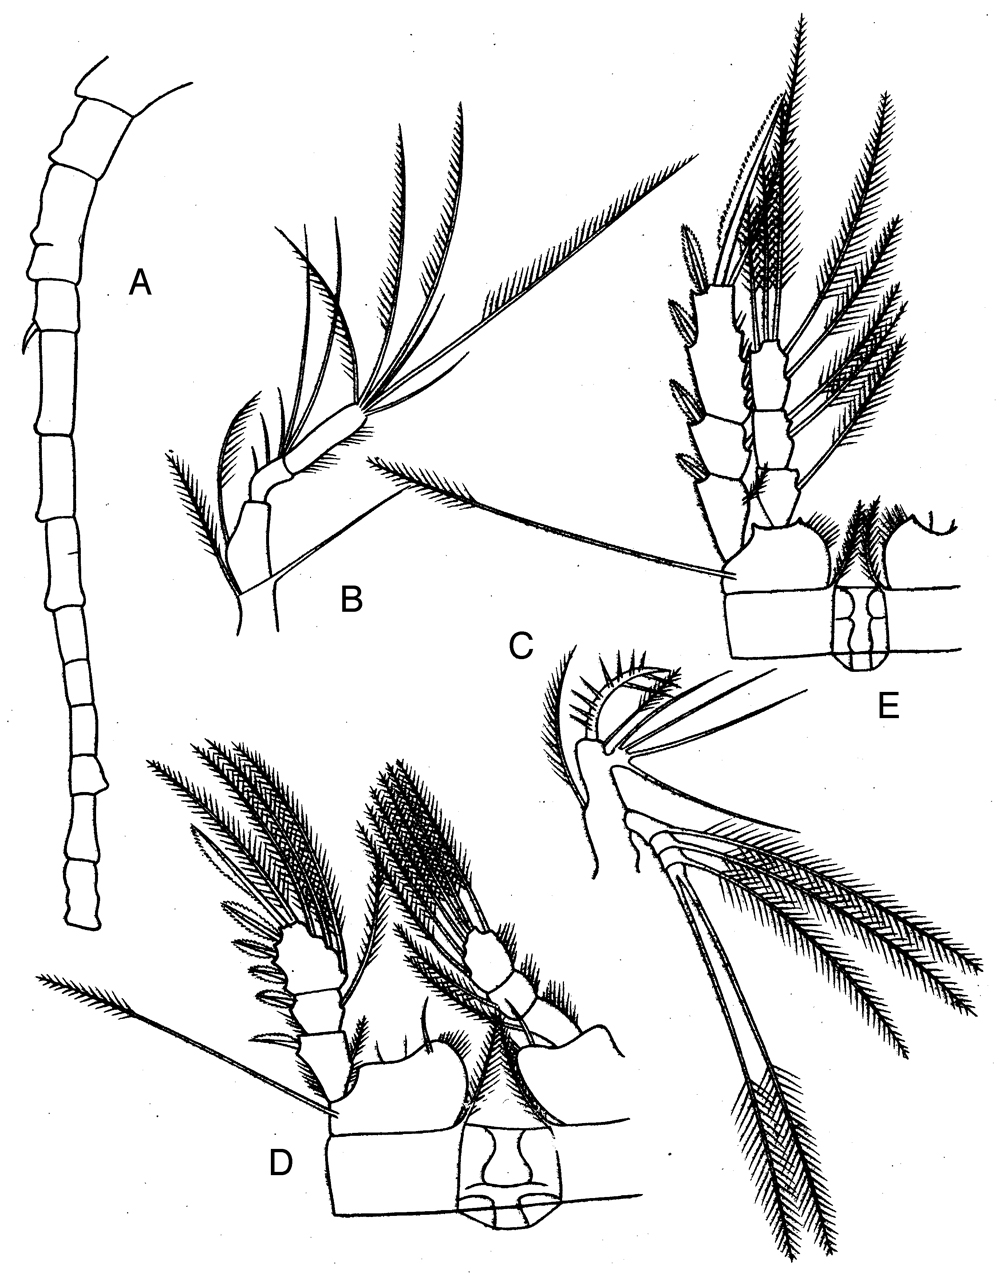 Species Oithona attenuata - Plate 15 of morphological figures